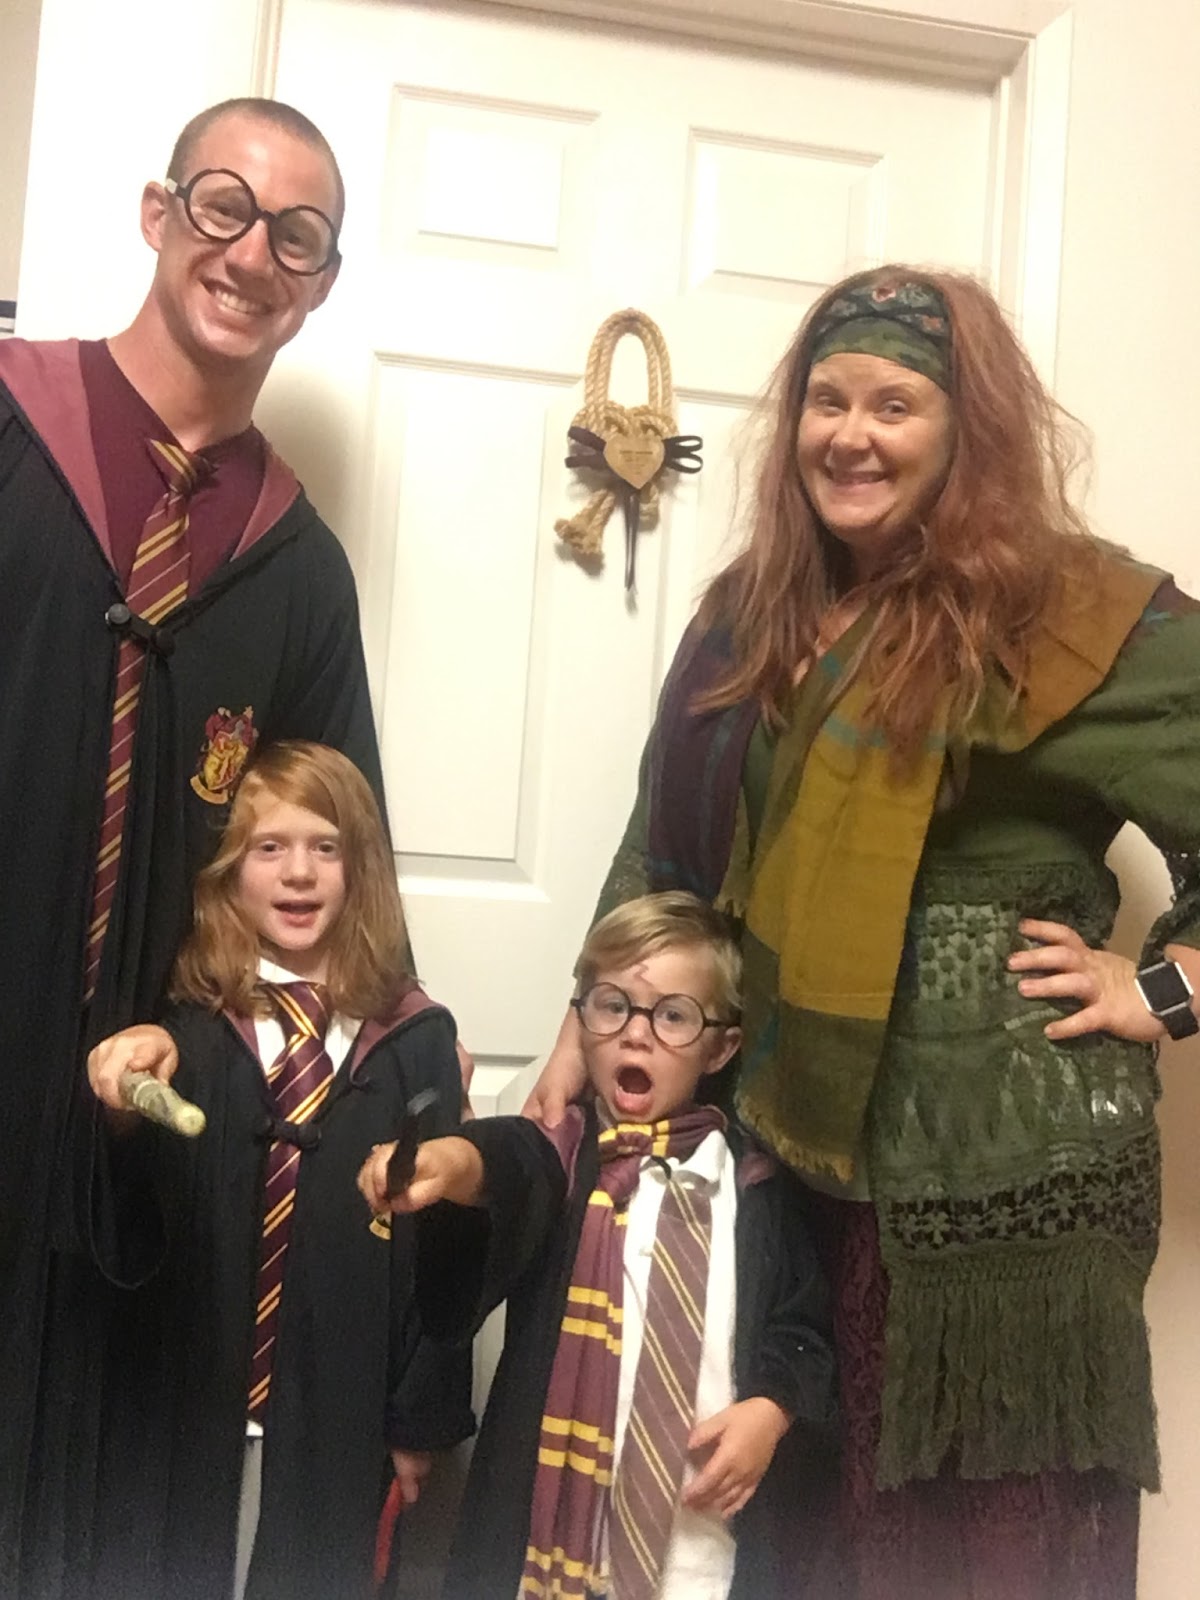 A Very Harry Potter Halloween!